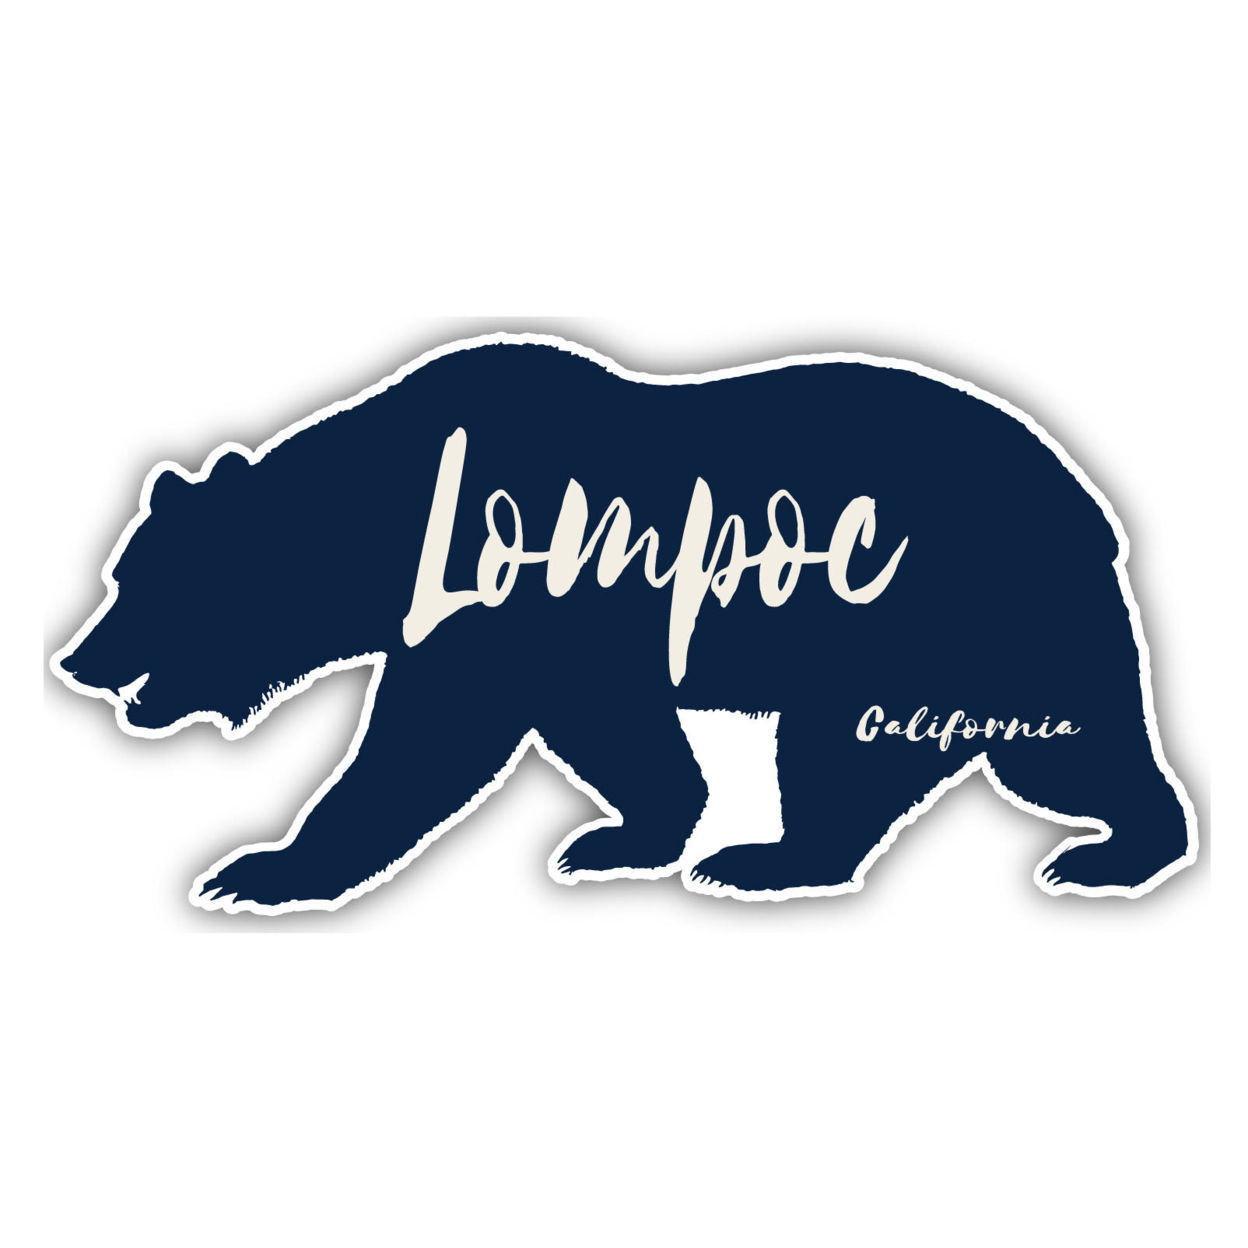 Lompoc California Souvenir Decorative Stickers (Choose Theme And Size) - 4-Inch, Adventures Awaits